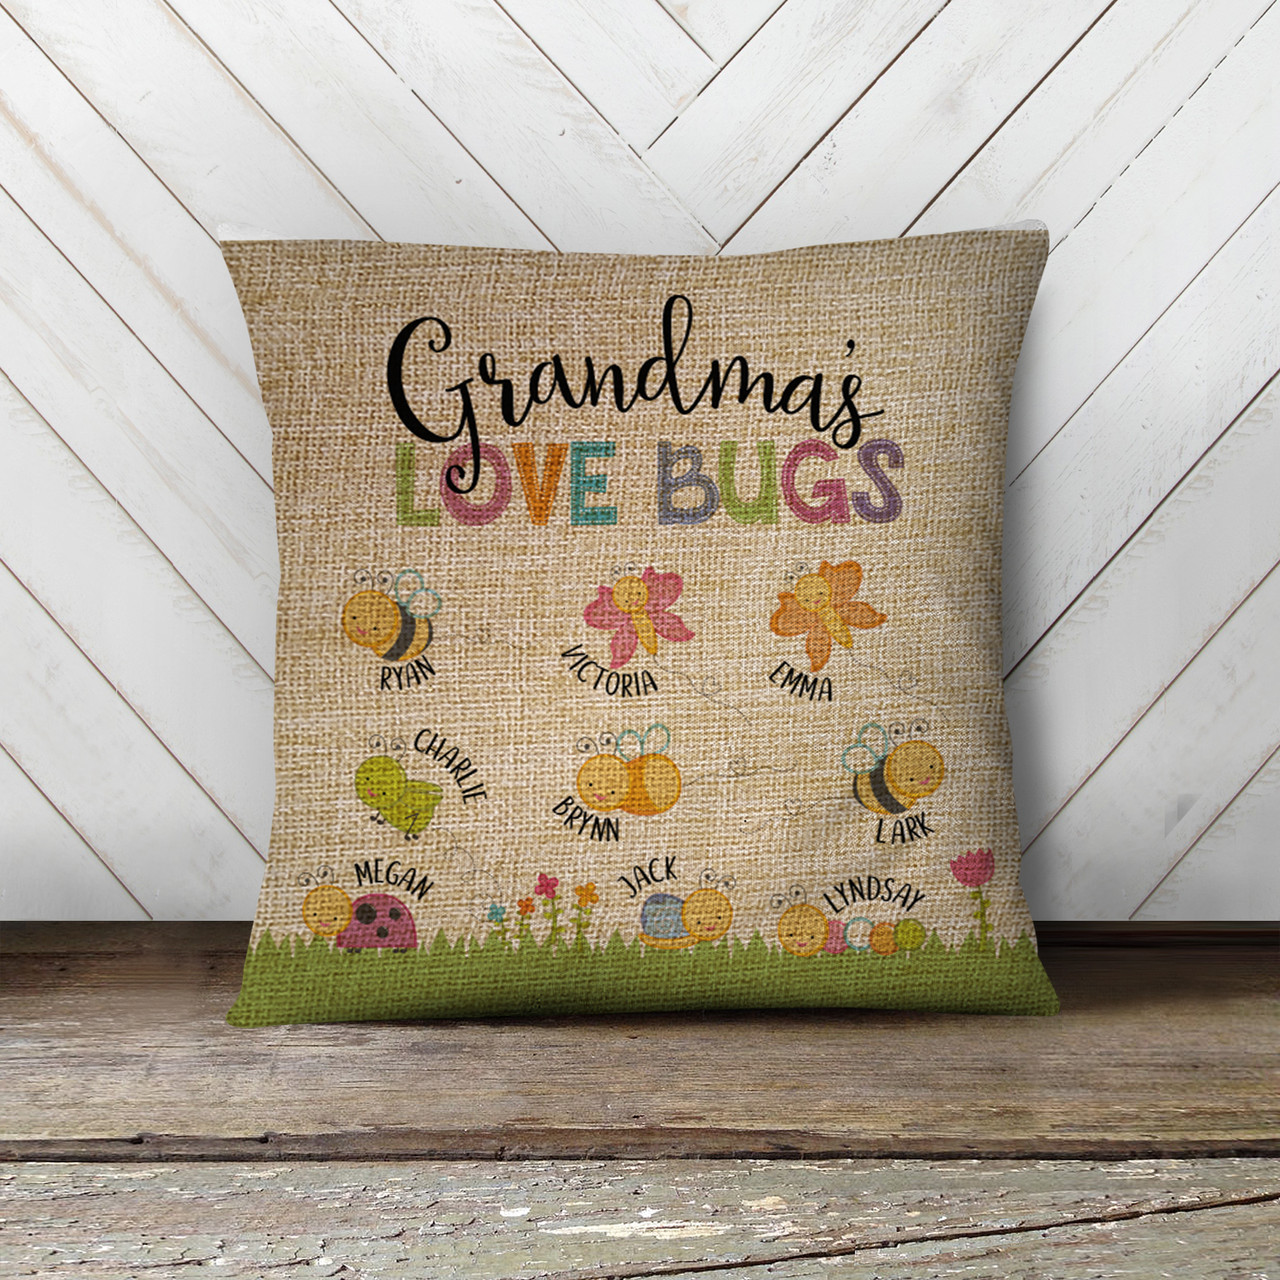 Personalized Shirt - Gift For Grandma - Christmas Pattern Grandma And  Grandkids - Christmas Gifts, Christmas Gift For Grandma (